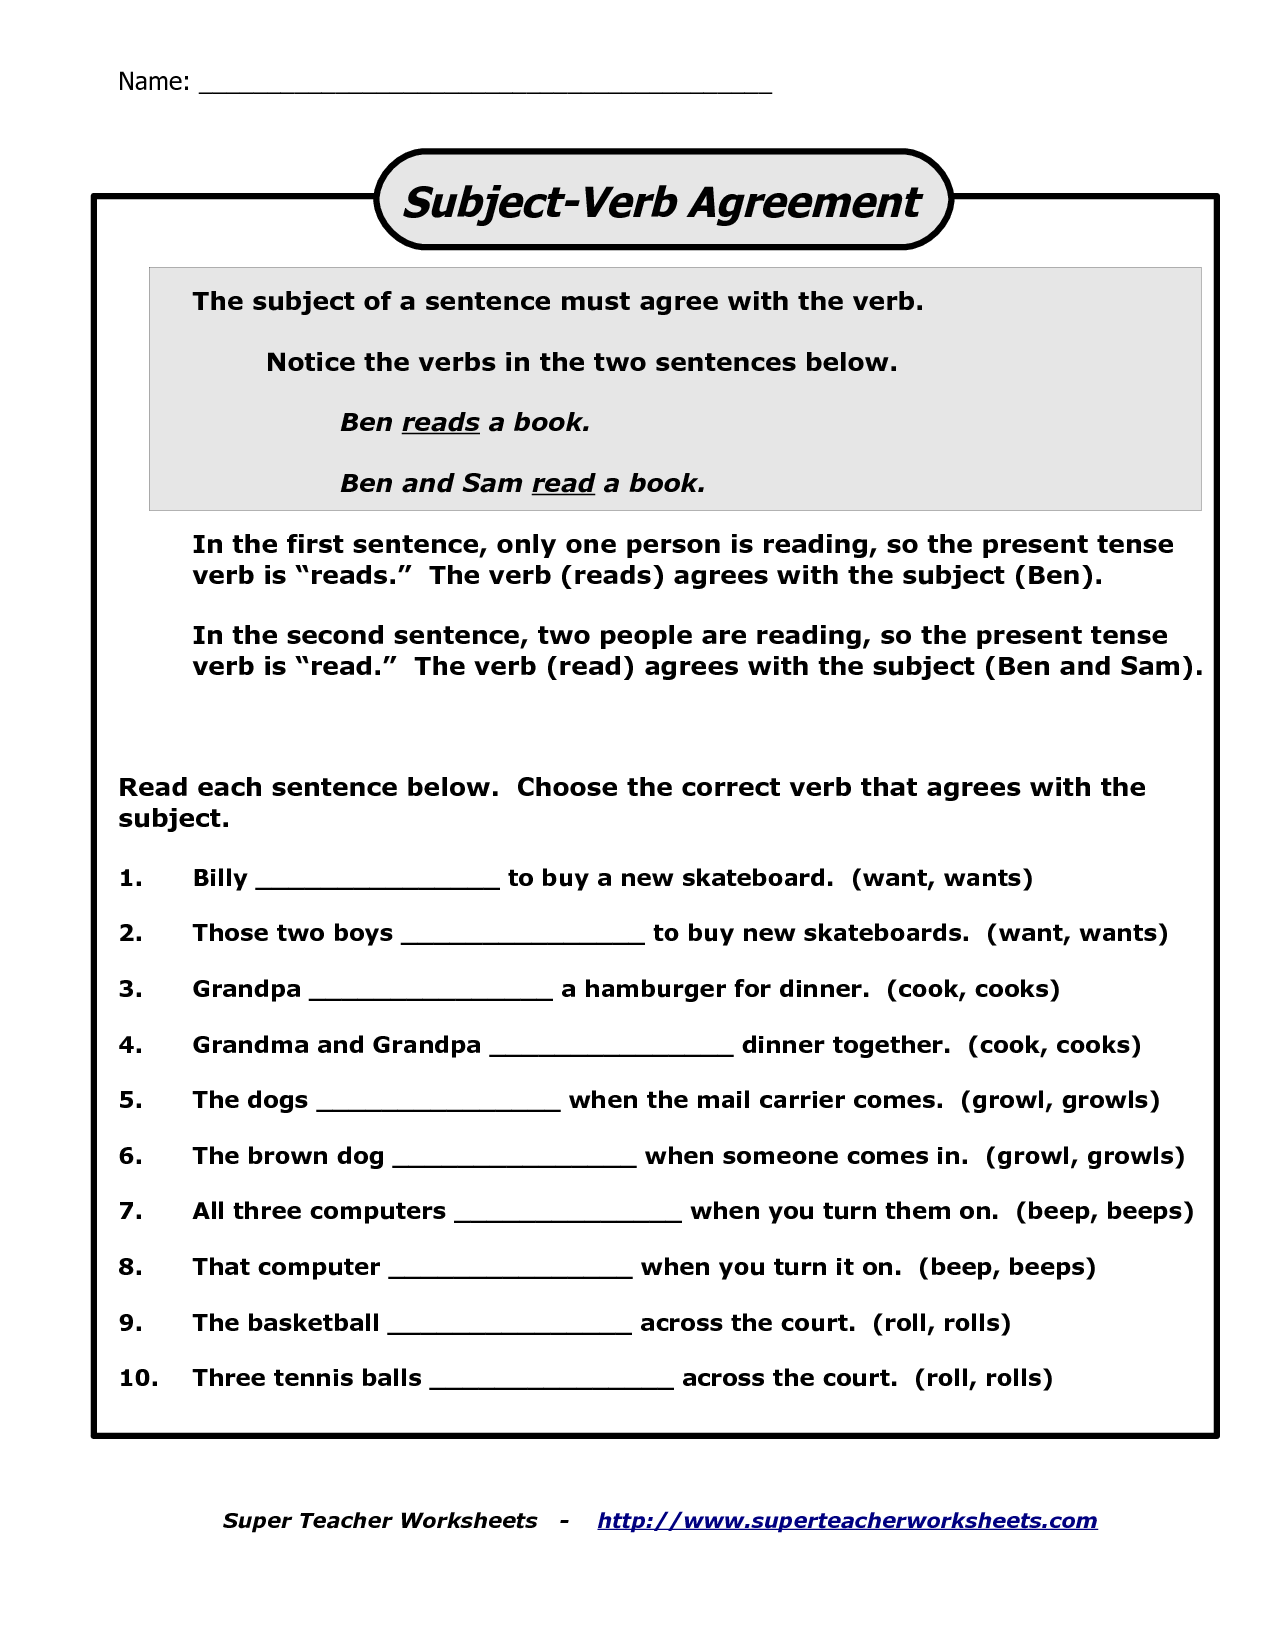 subject-verb-agreement-practice-worksheet